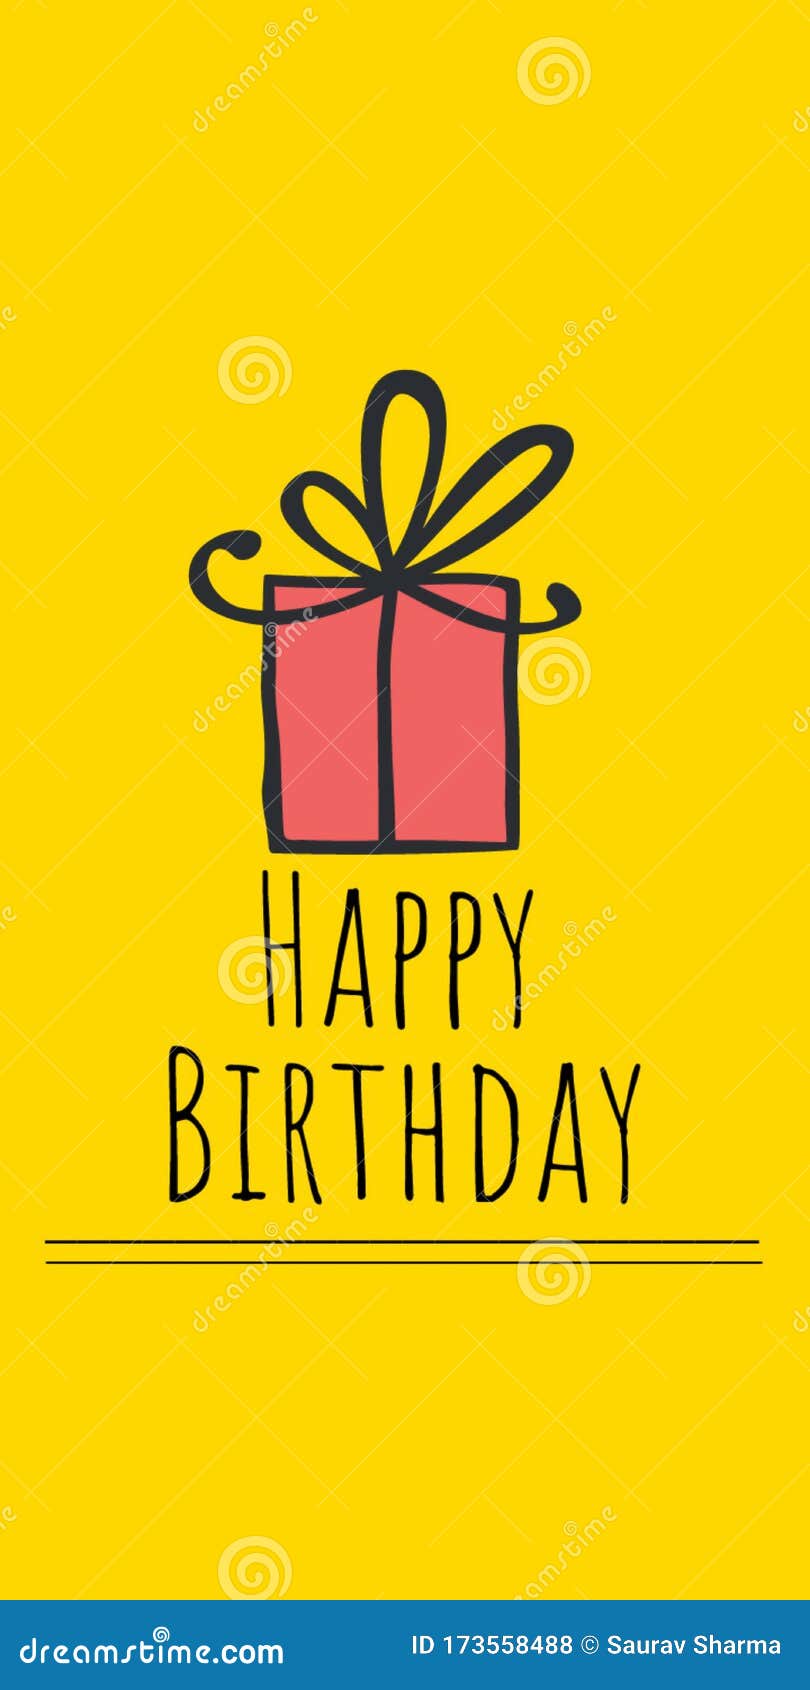 Wishing Happy Birthday Cards Images with Yellow Background Stock  Illustration - Illustration of birthday, wishing: 173558488